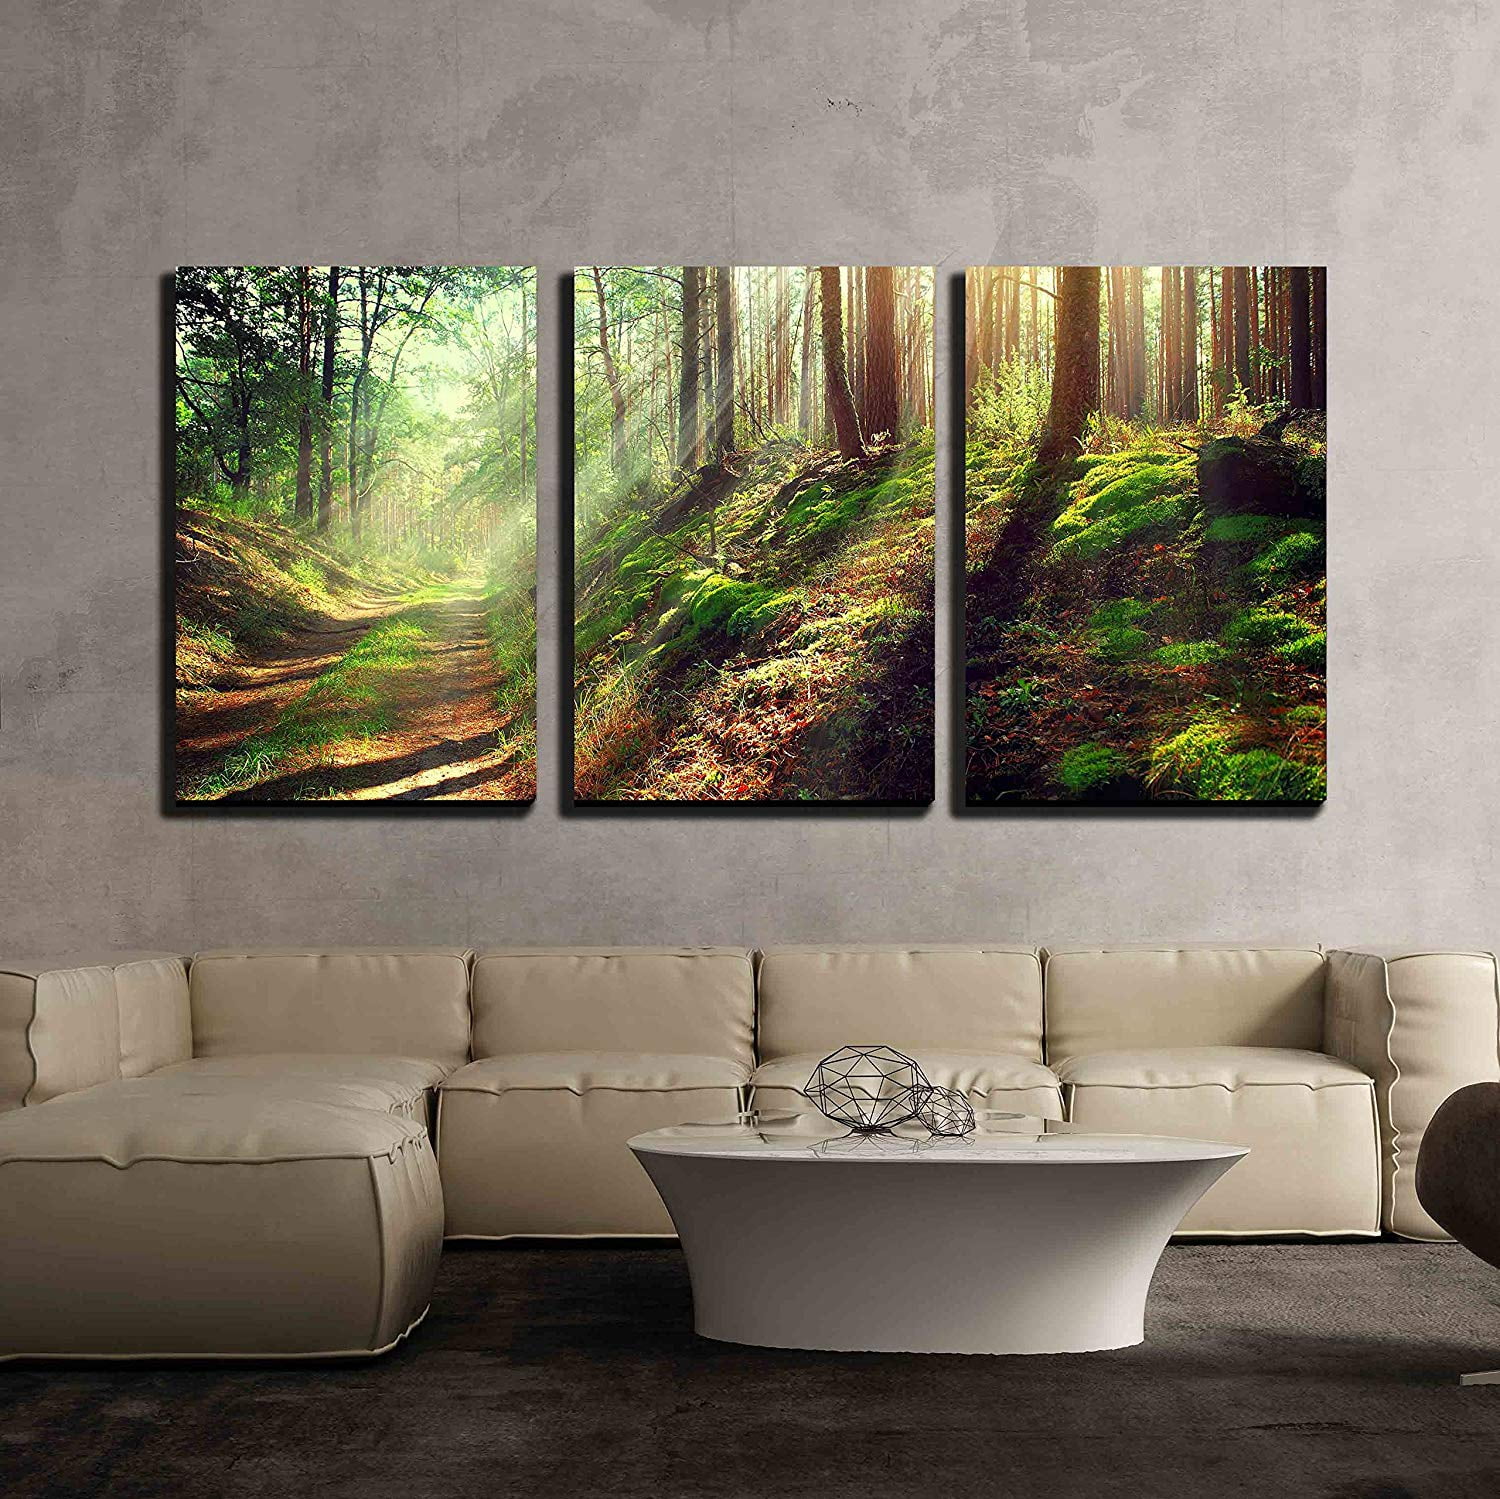 HD Canvas Prints Autumn Tree Road Landscape Wall Art Oil Painting Home Decor 